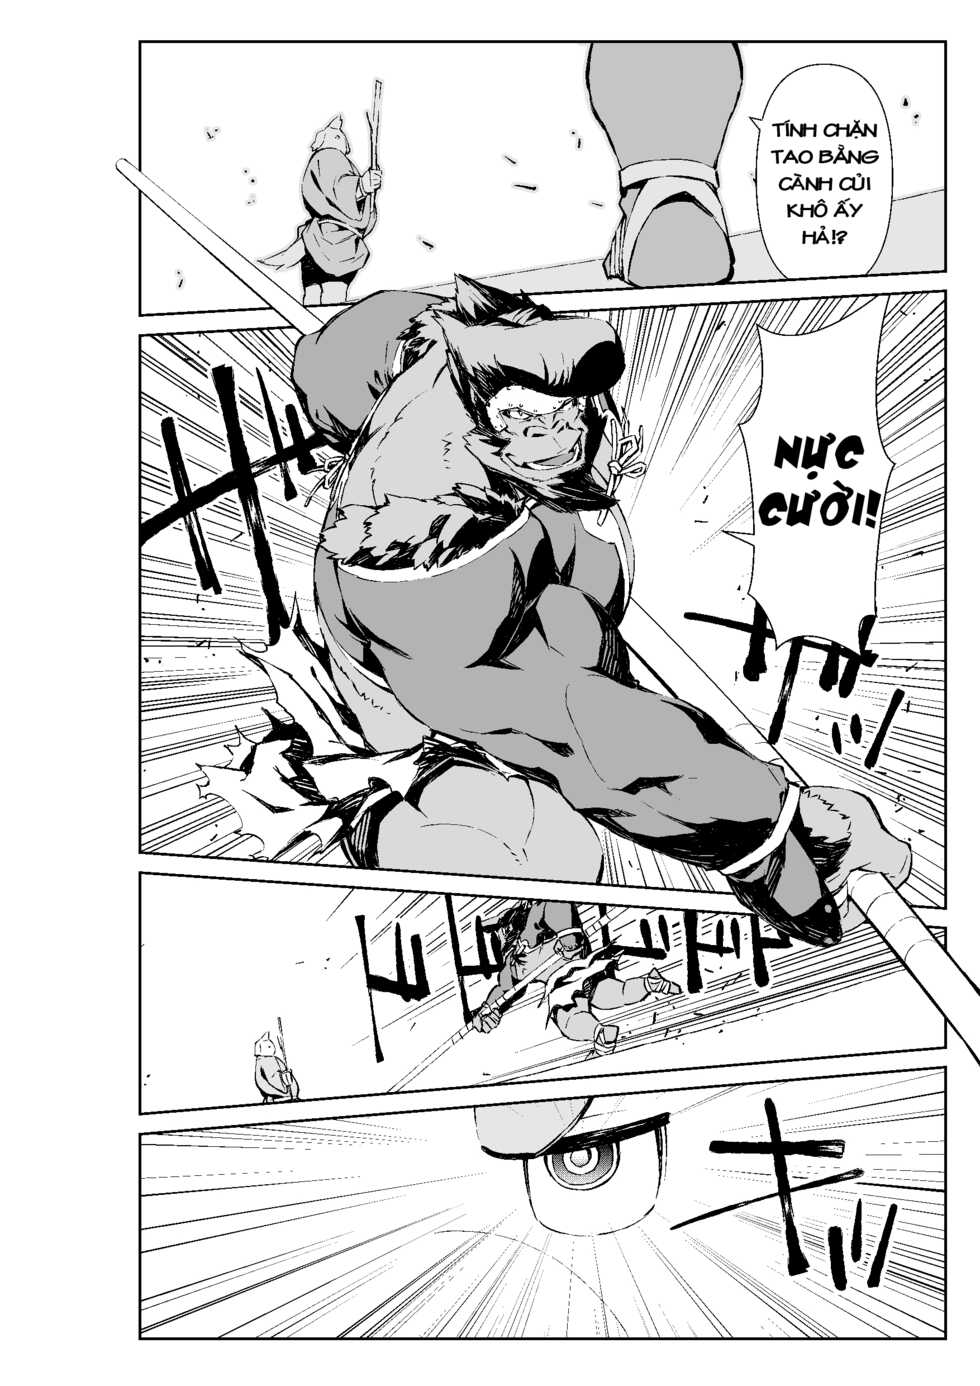 [Mennsuke] Manga Không Tên Của Mennsuke 1 - Hồi 2 - Page 2